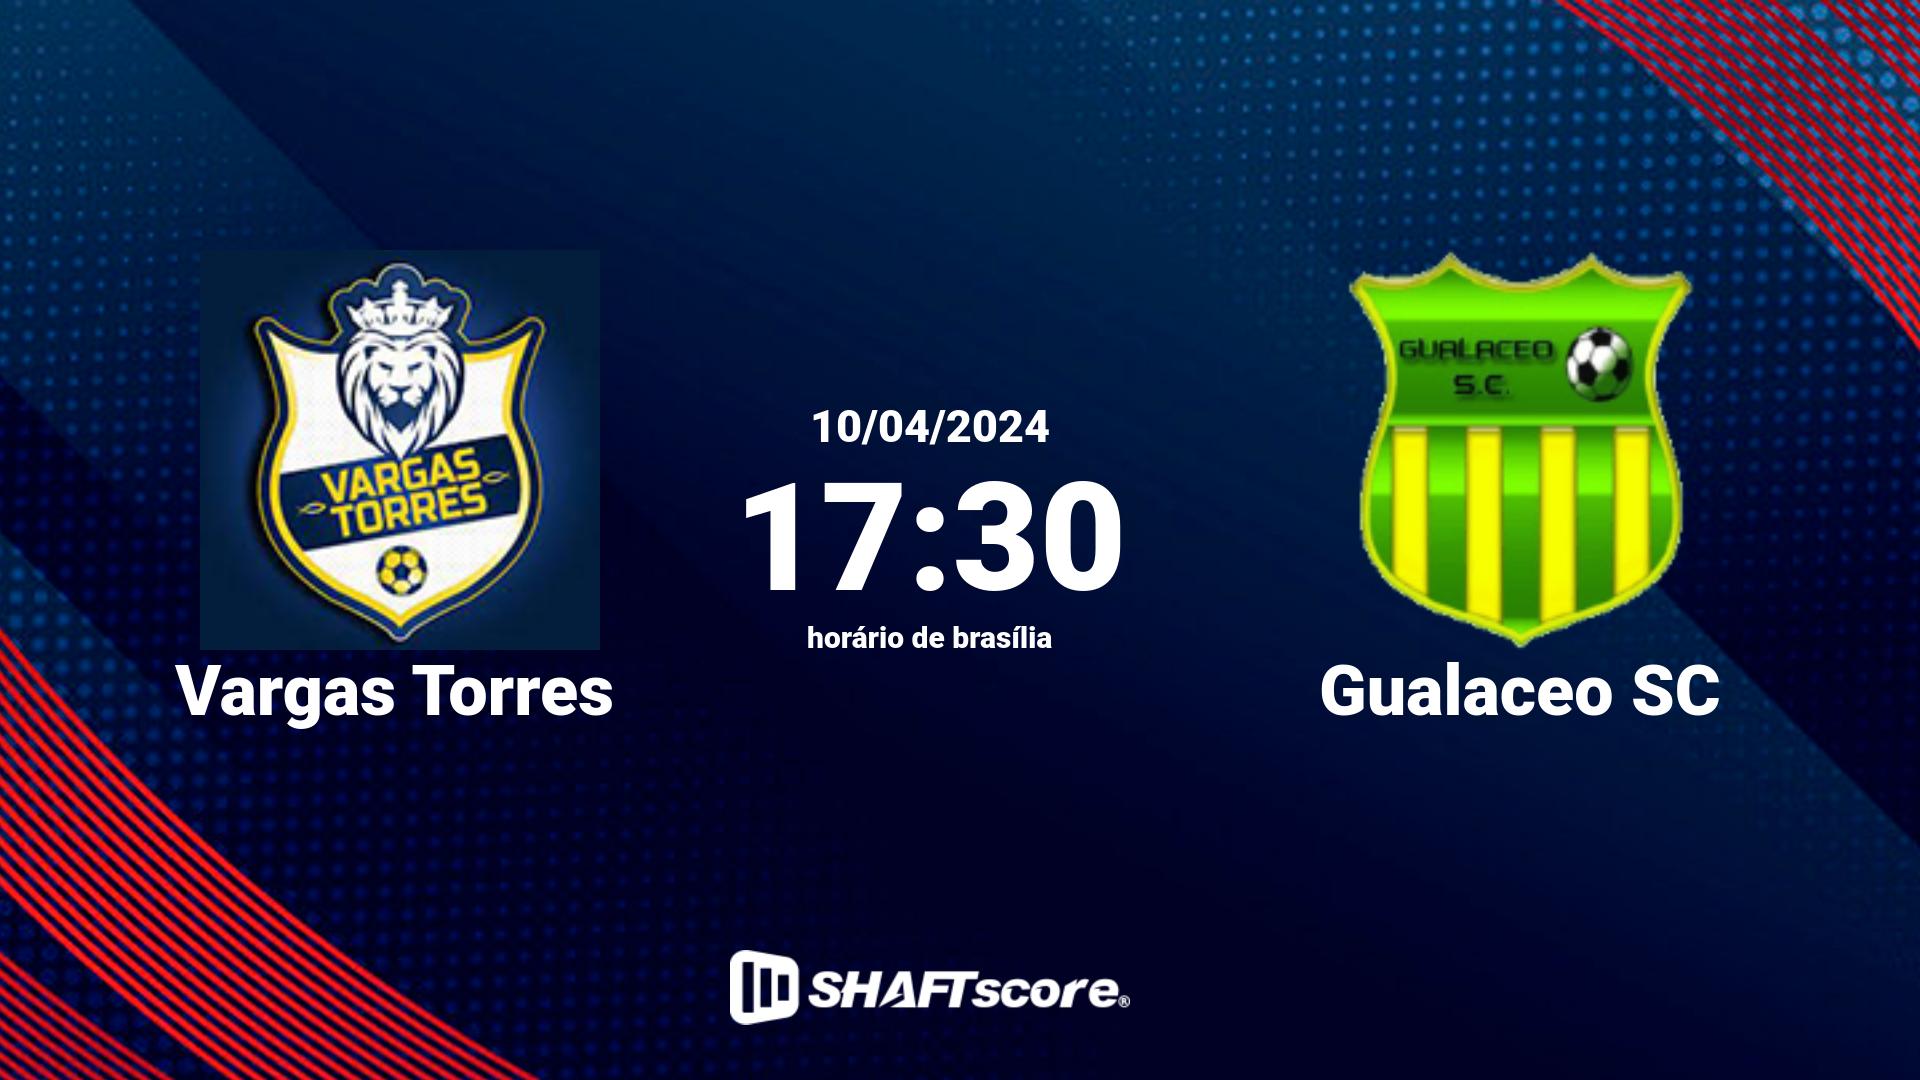 Estatísticas do jogo Vargas Torres vs Gualaceo SC 10.04 17:30